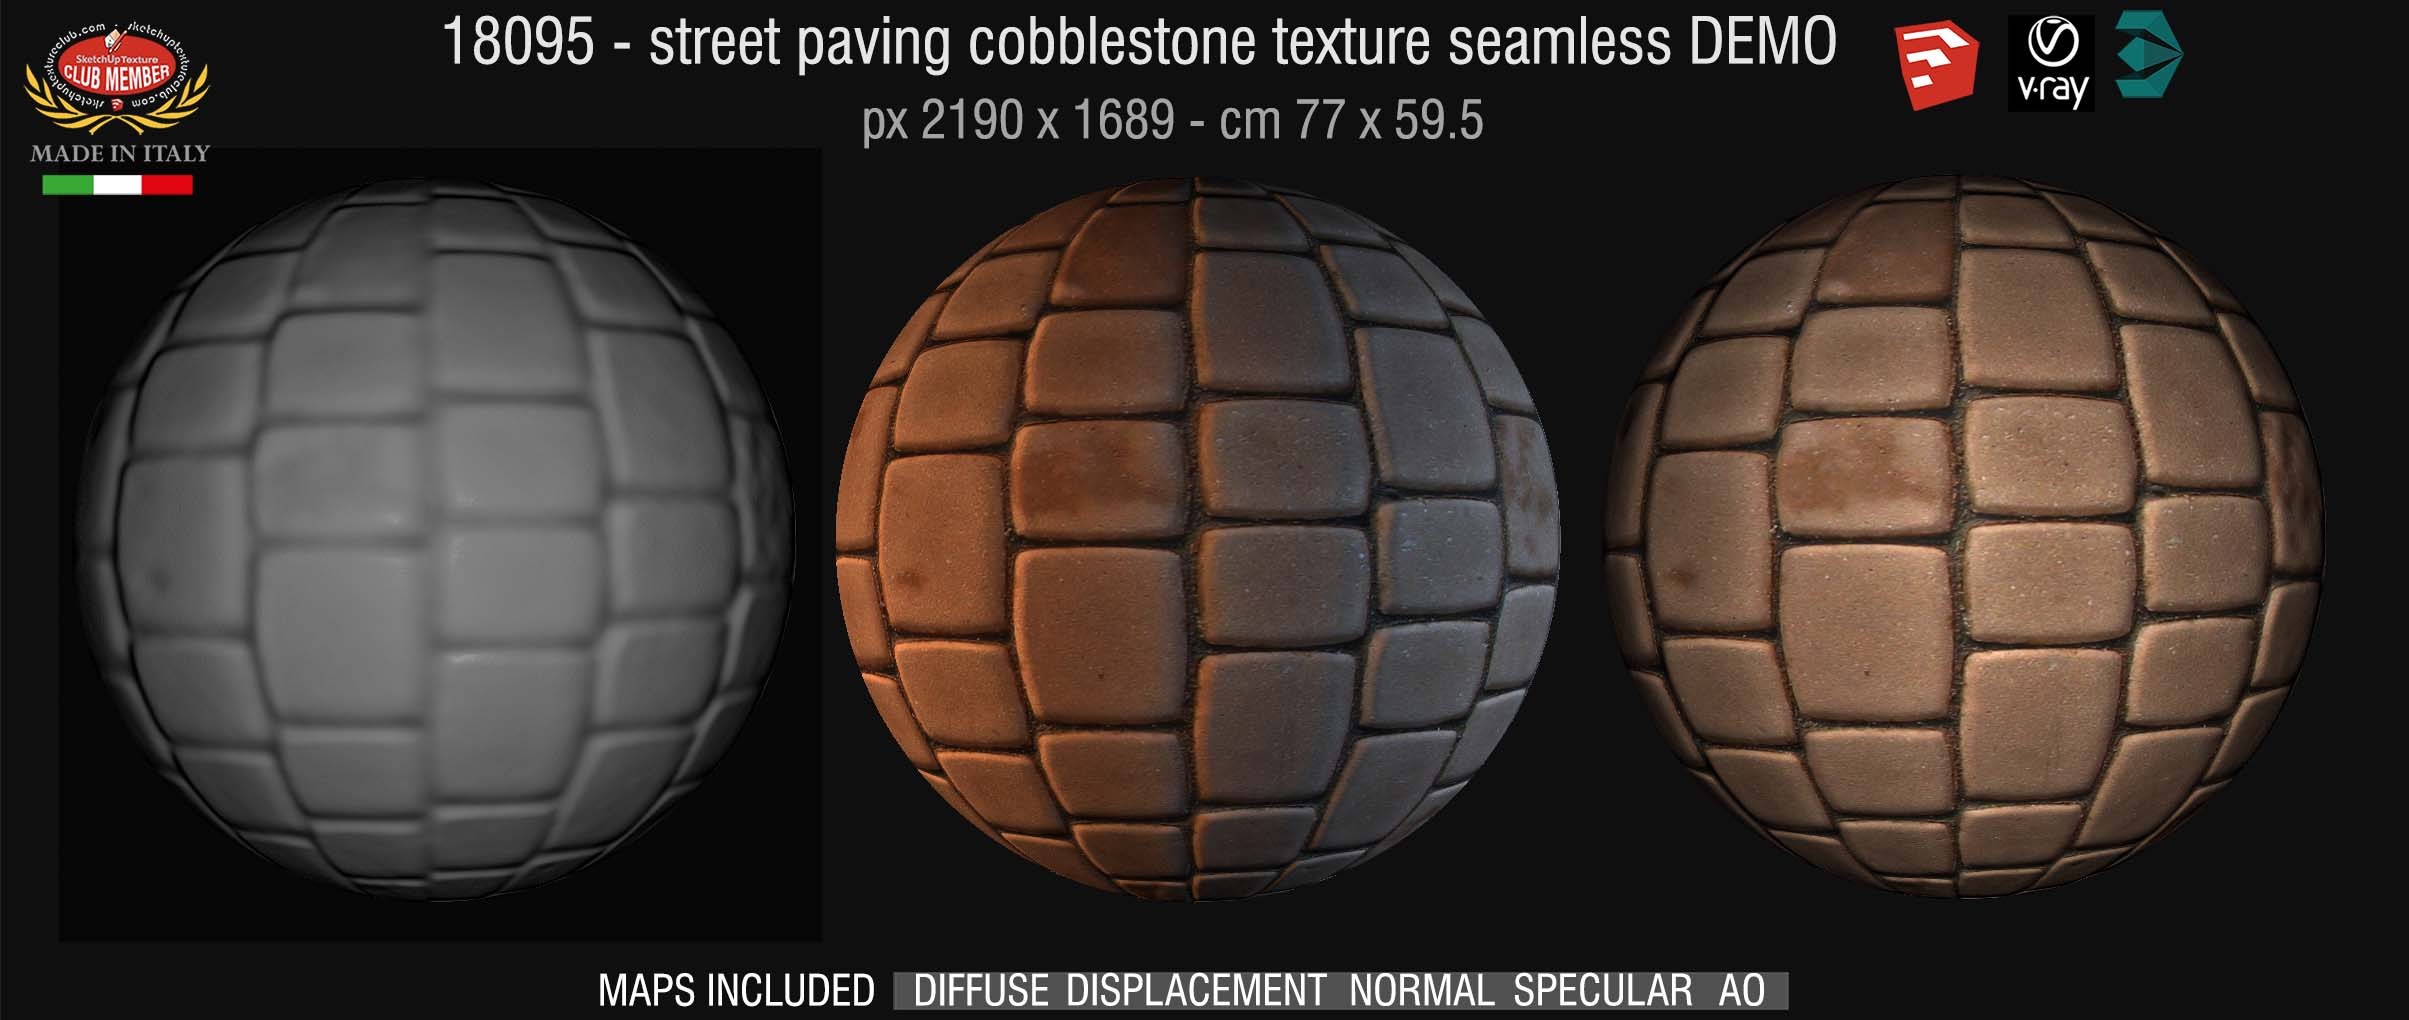 18095 HR Street paving cobblestone texture seamless + maps DEMO